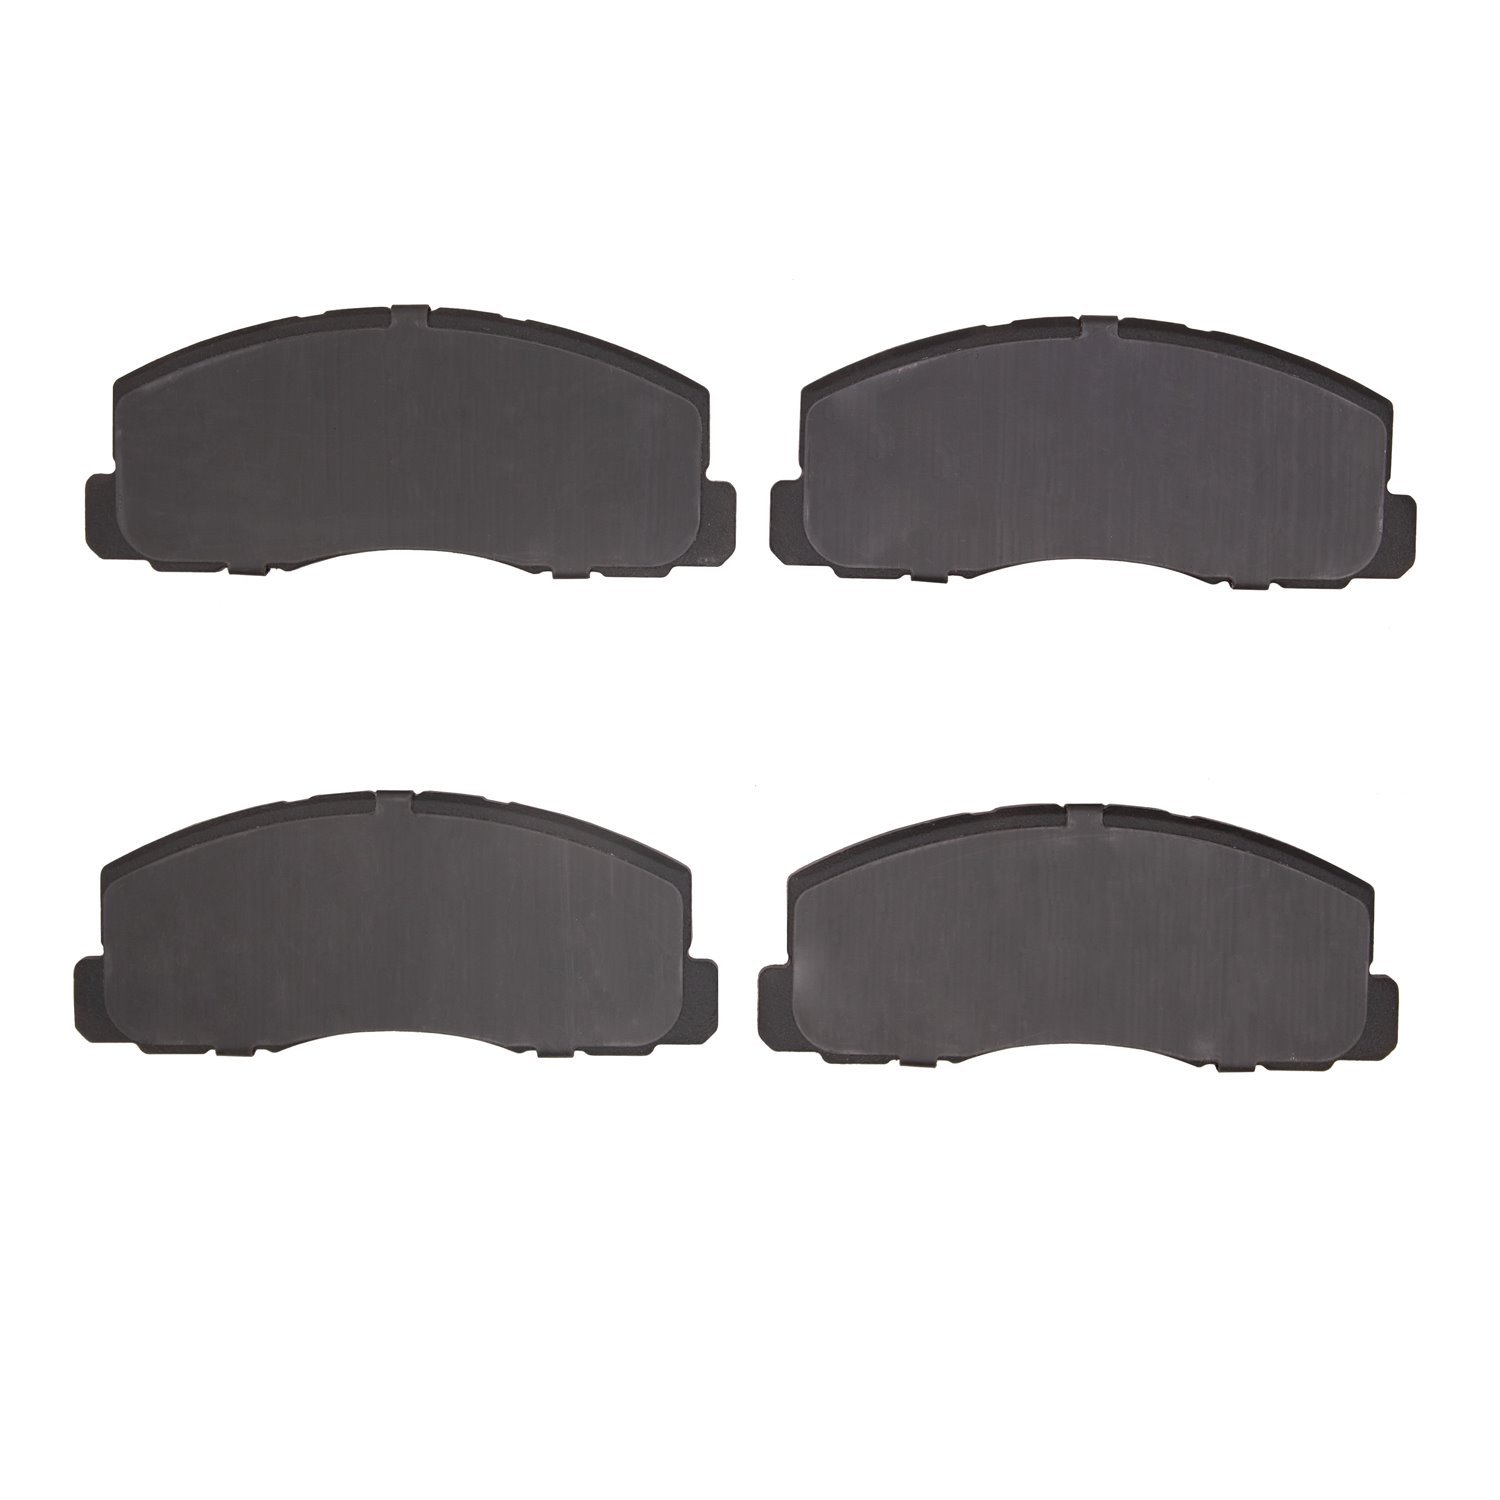 1310-0328-00 3000-Series Ceramic Brake Pads, 1983-1991 Multiple Makes/Models, Position: Front